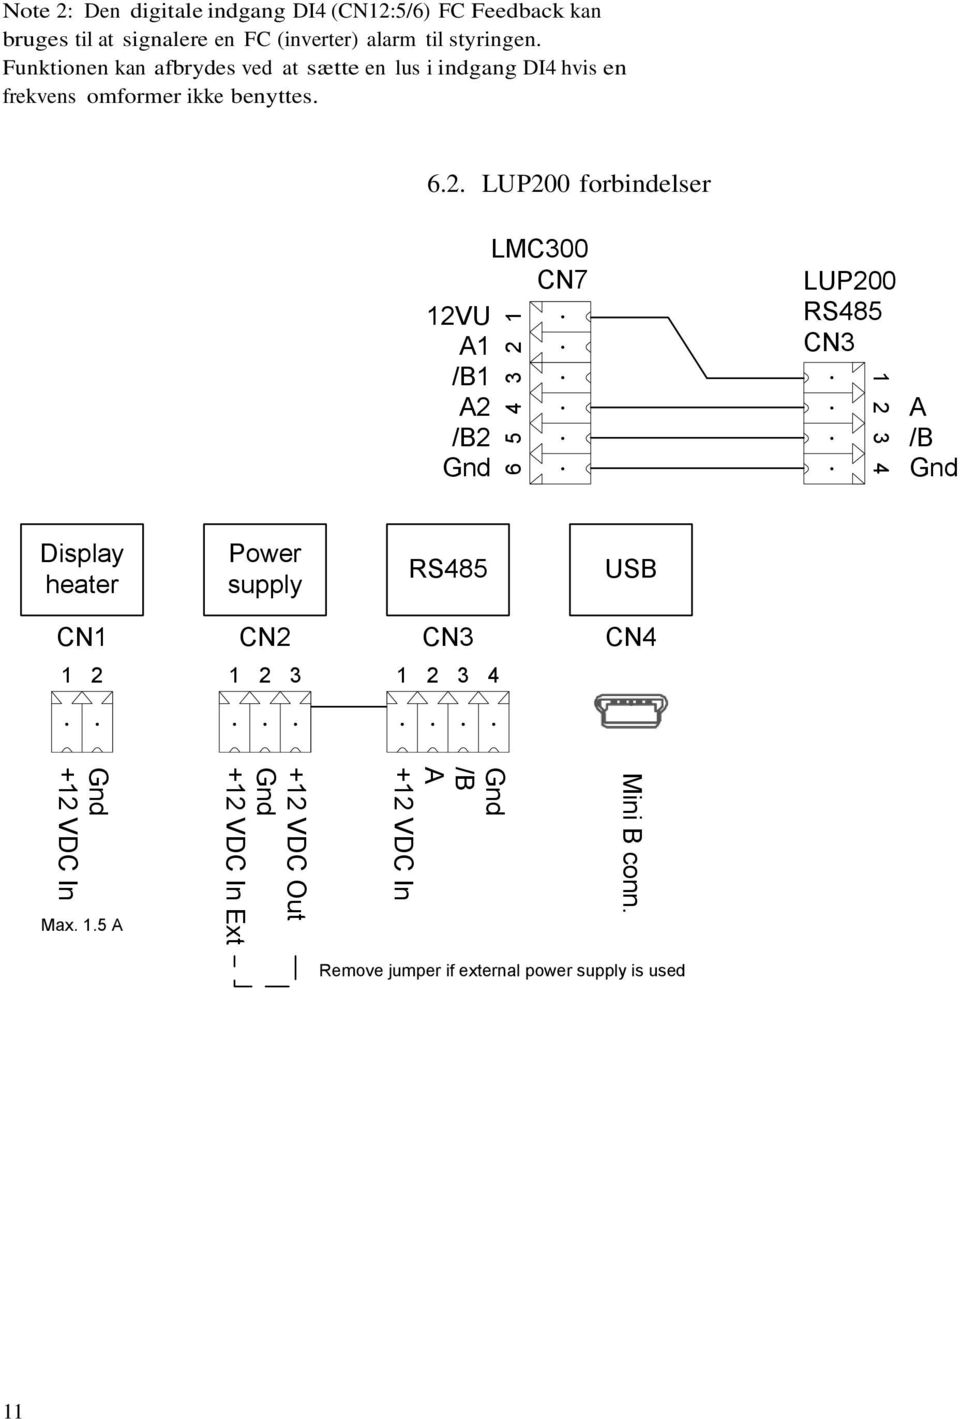 LUP200 forbindelser LMC300 CN7 12VU A1 /B1 A2 /B2 Gnd 6 5 4 3 2 1 LUP200 RS485 CN3 1 2 3 4 A /B Gnd Display heater Power supply RS485